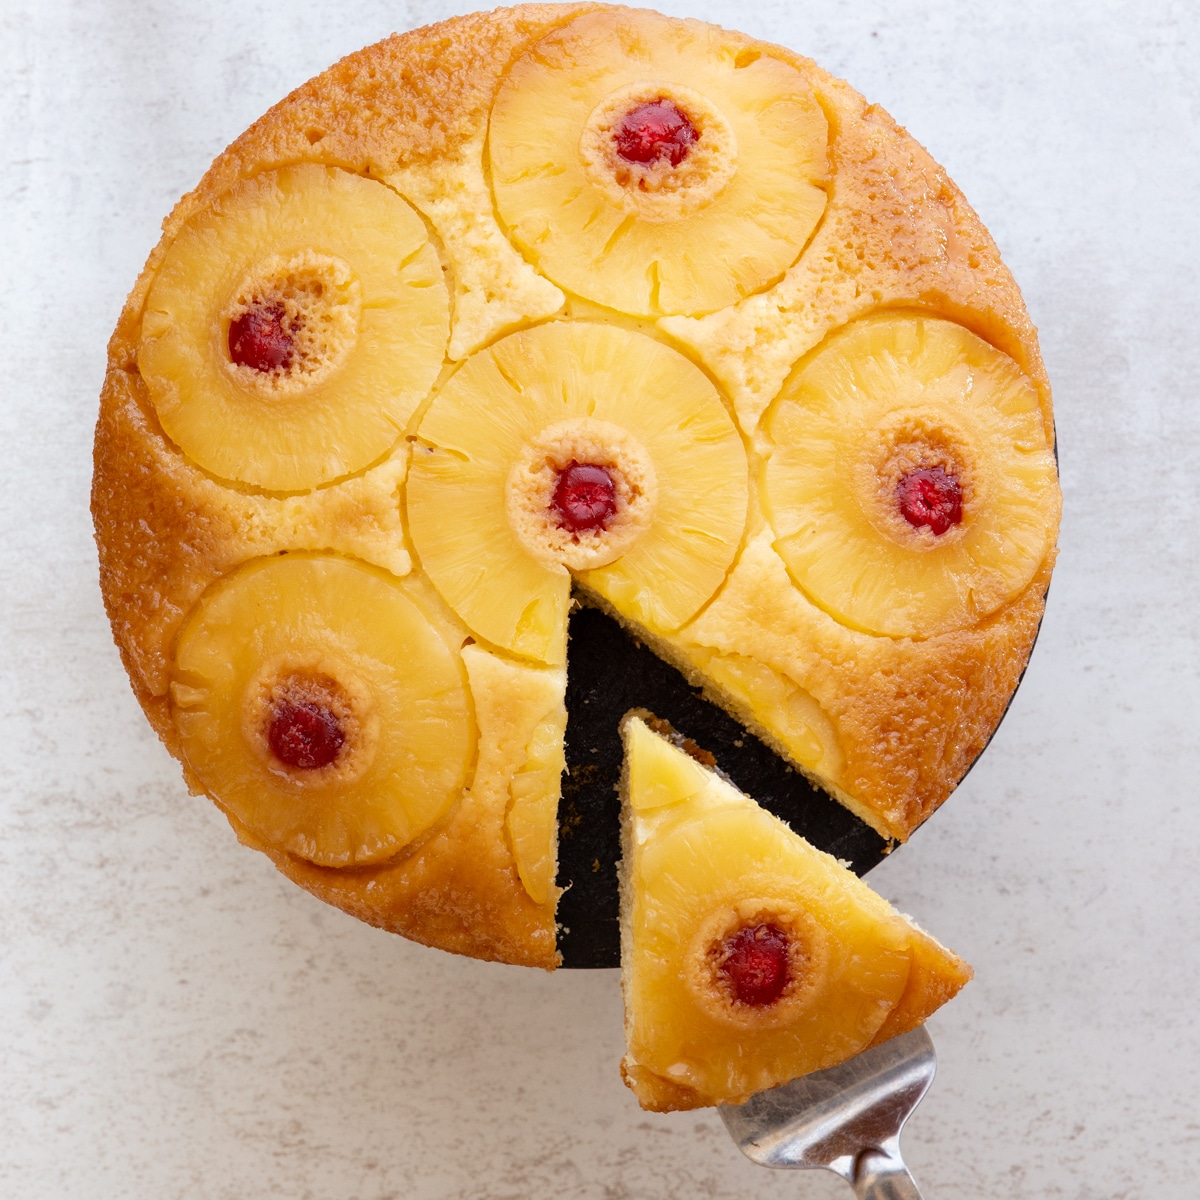 https://anitalianinmykitchen.com/wp-content/uploads/2020/10/pineapple-upside-down-cake-sq-2-1-of-1.jpg